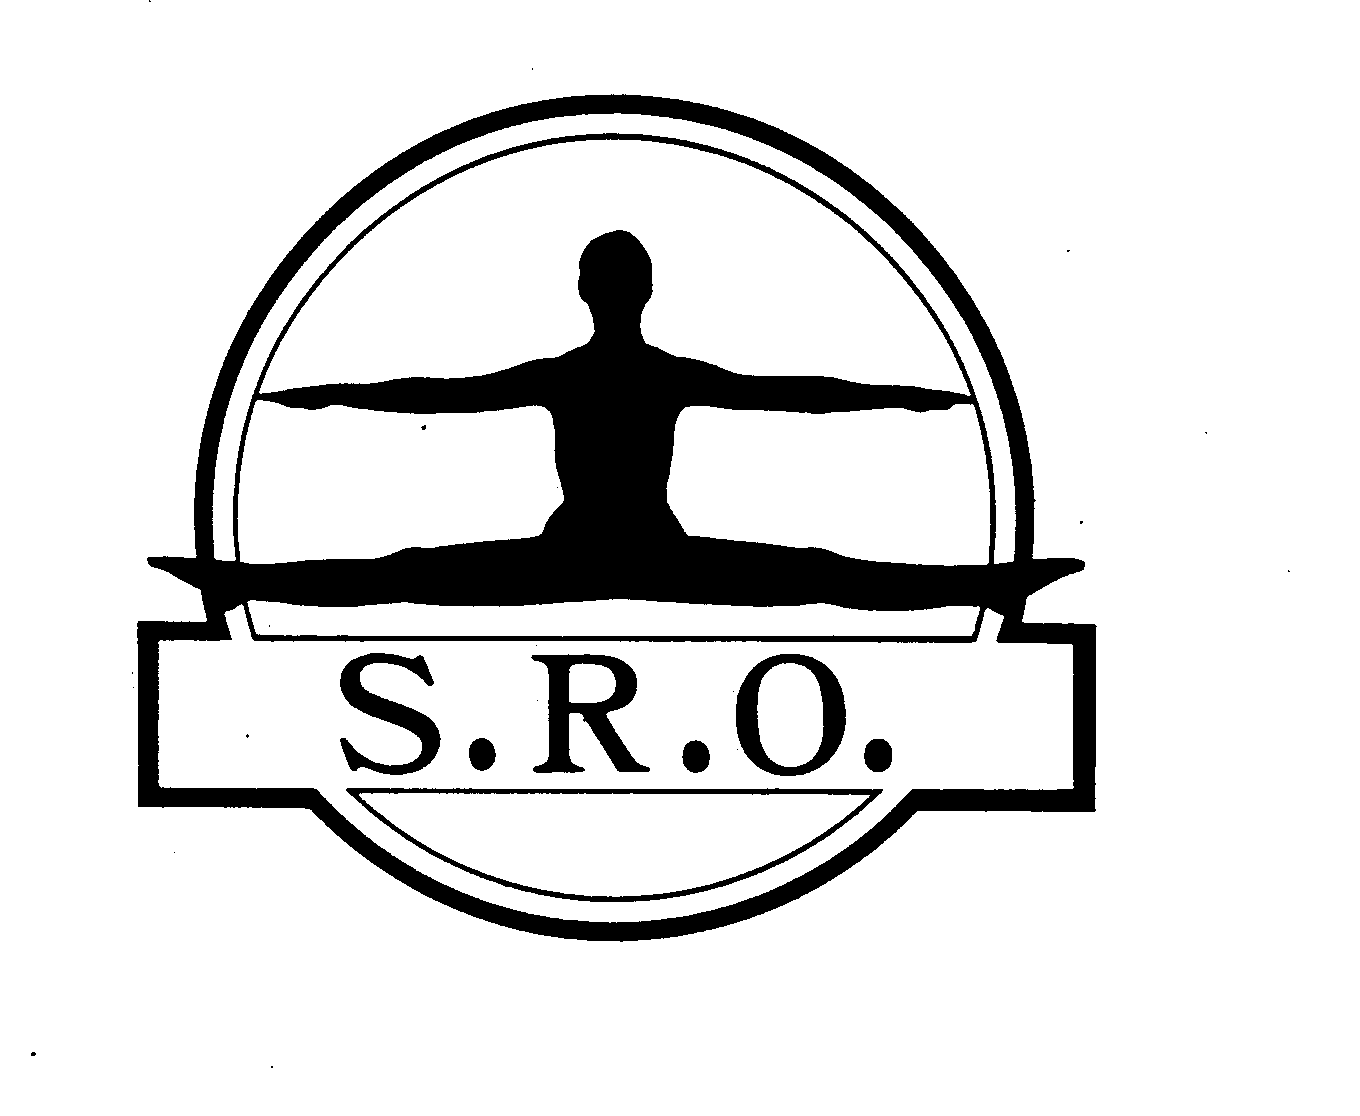 S.R.O.